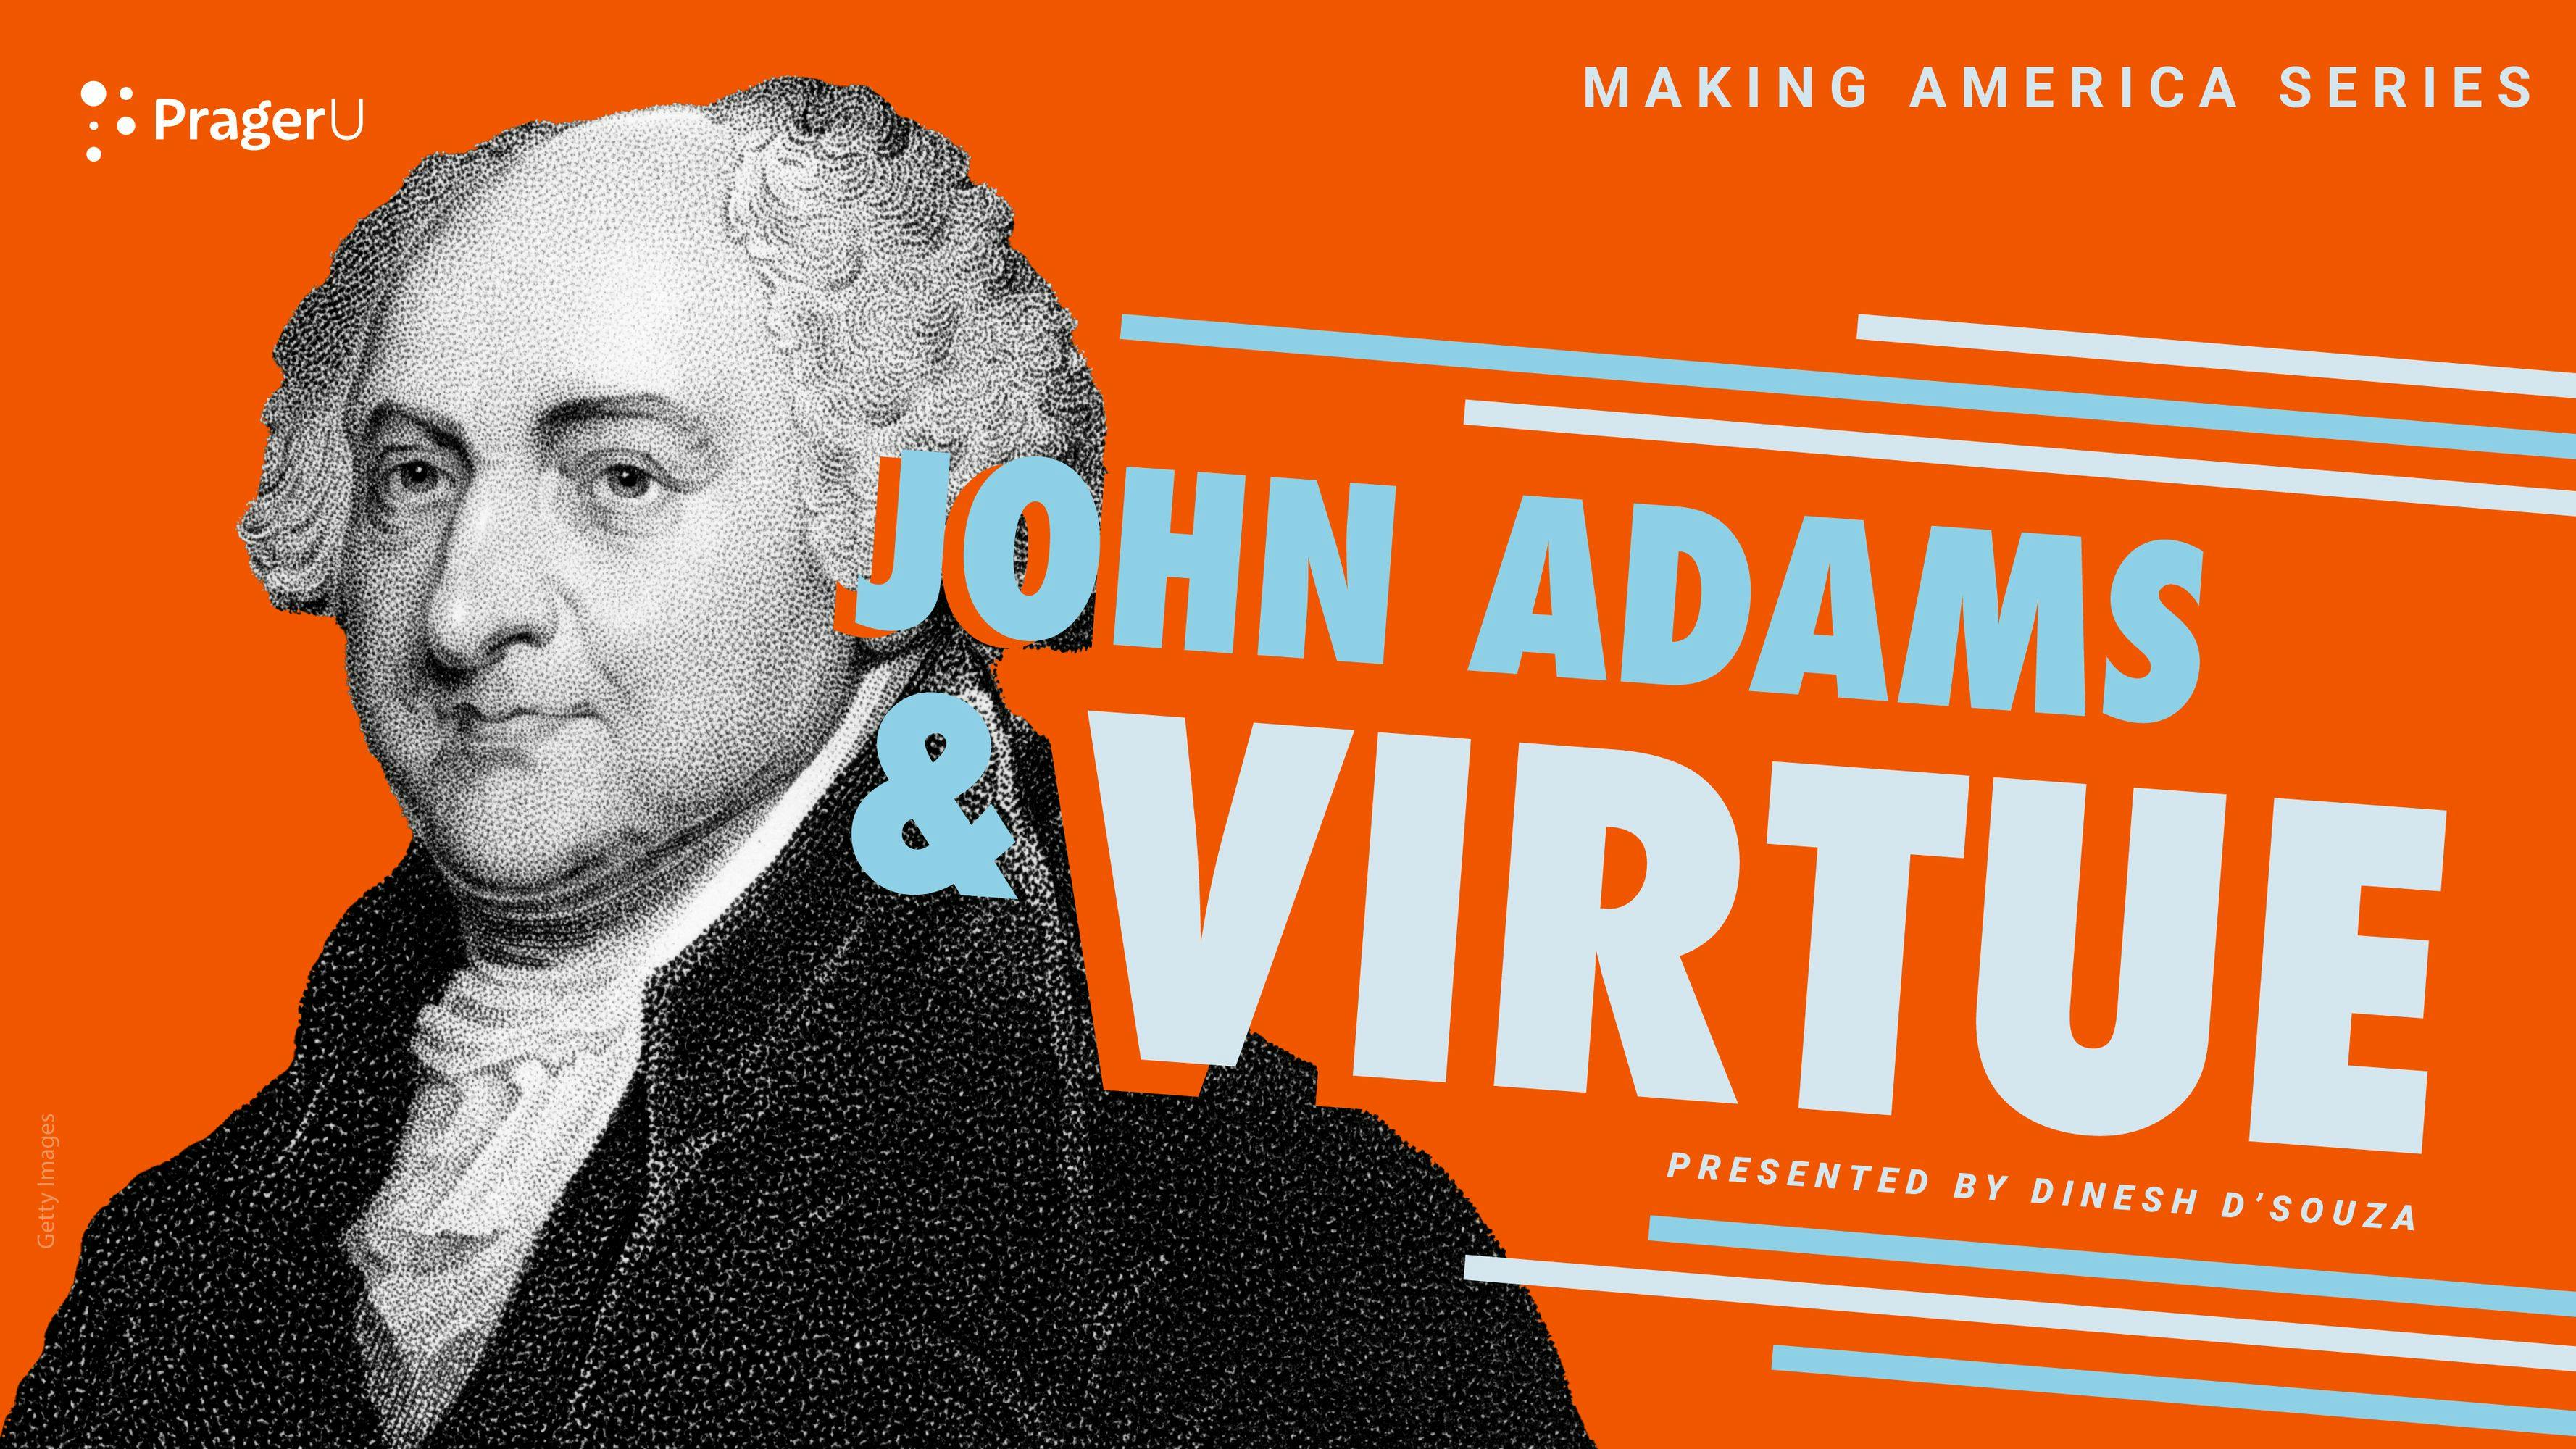  John Adams and Virtue: Making America